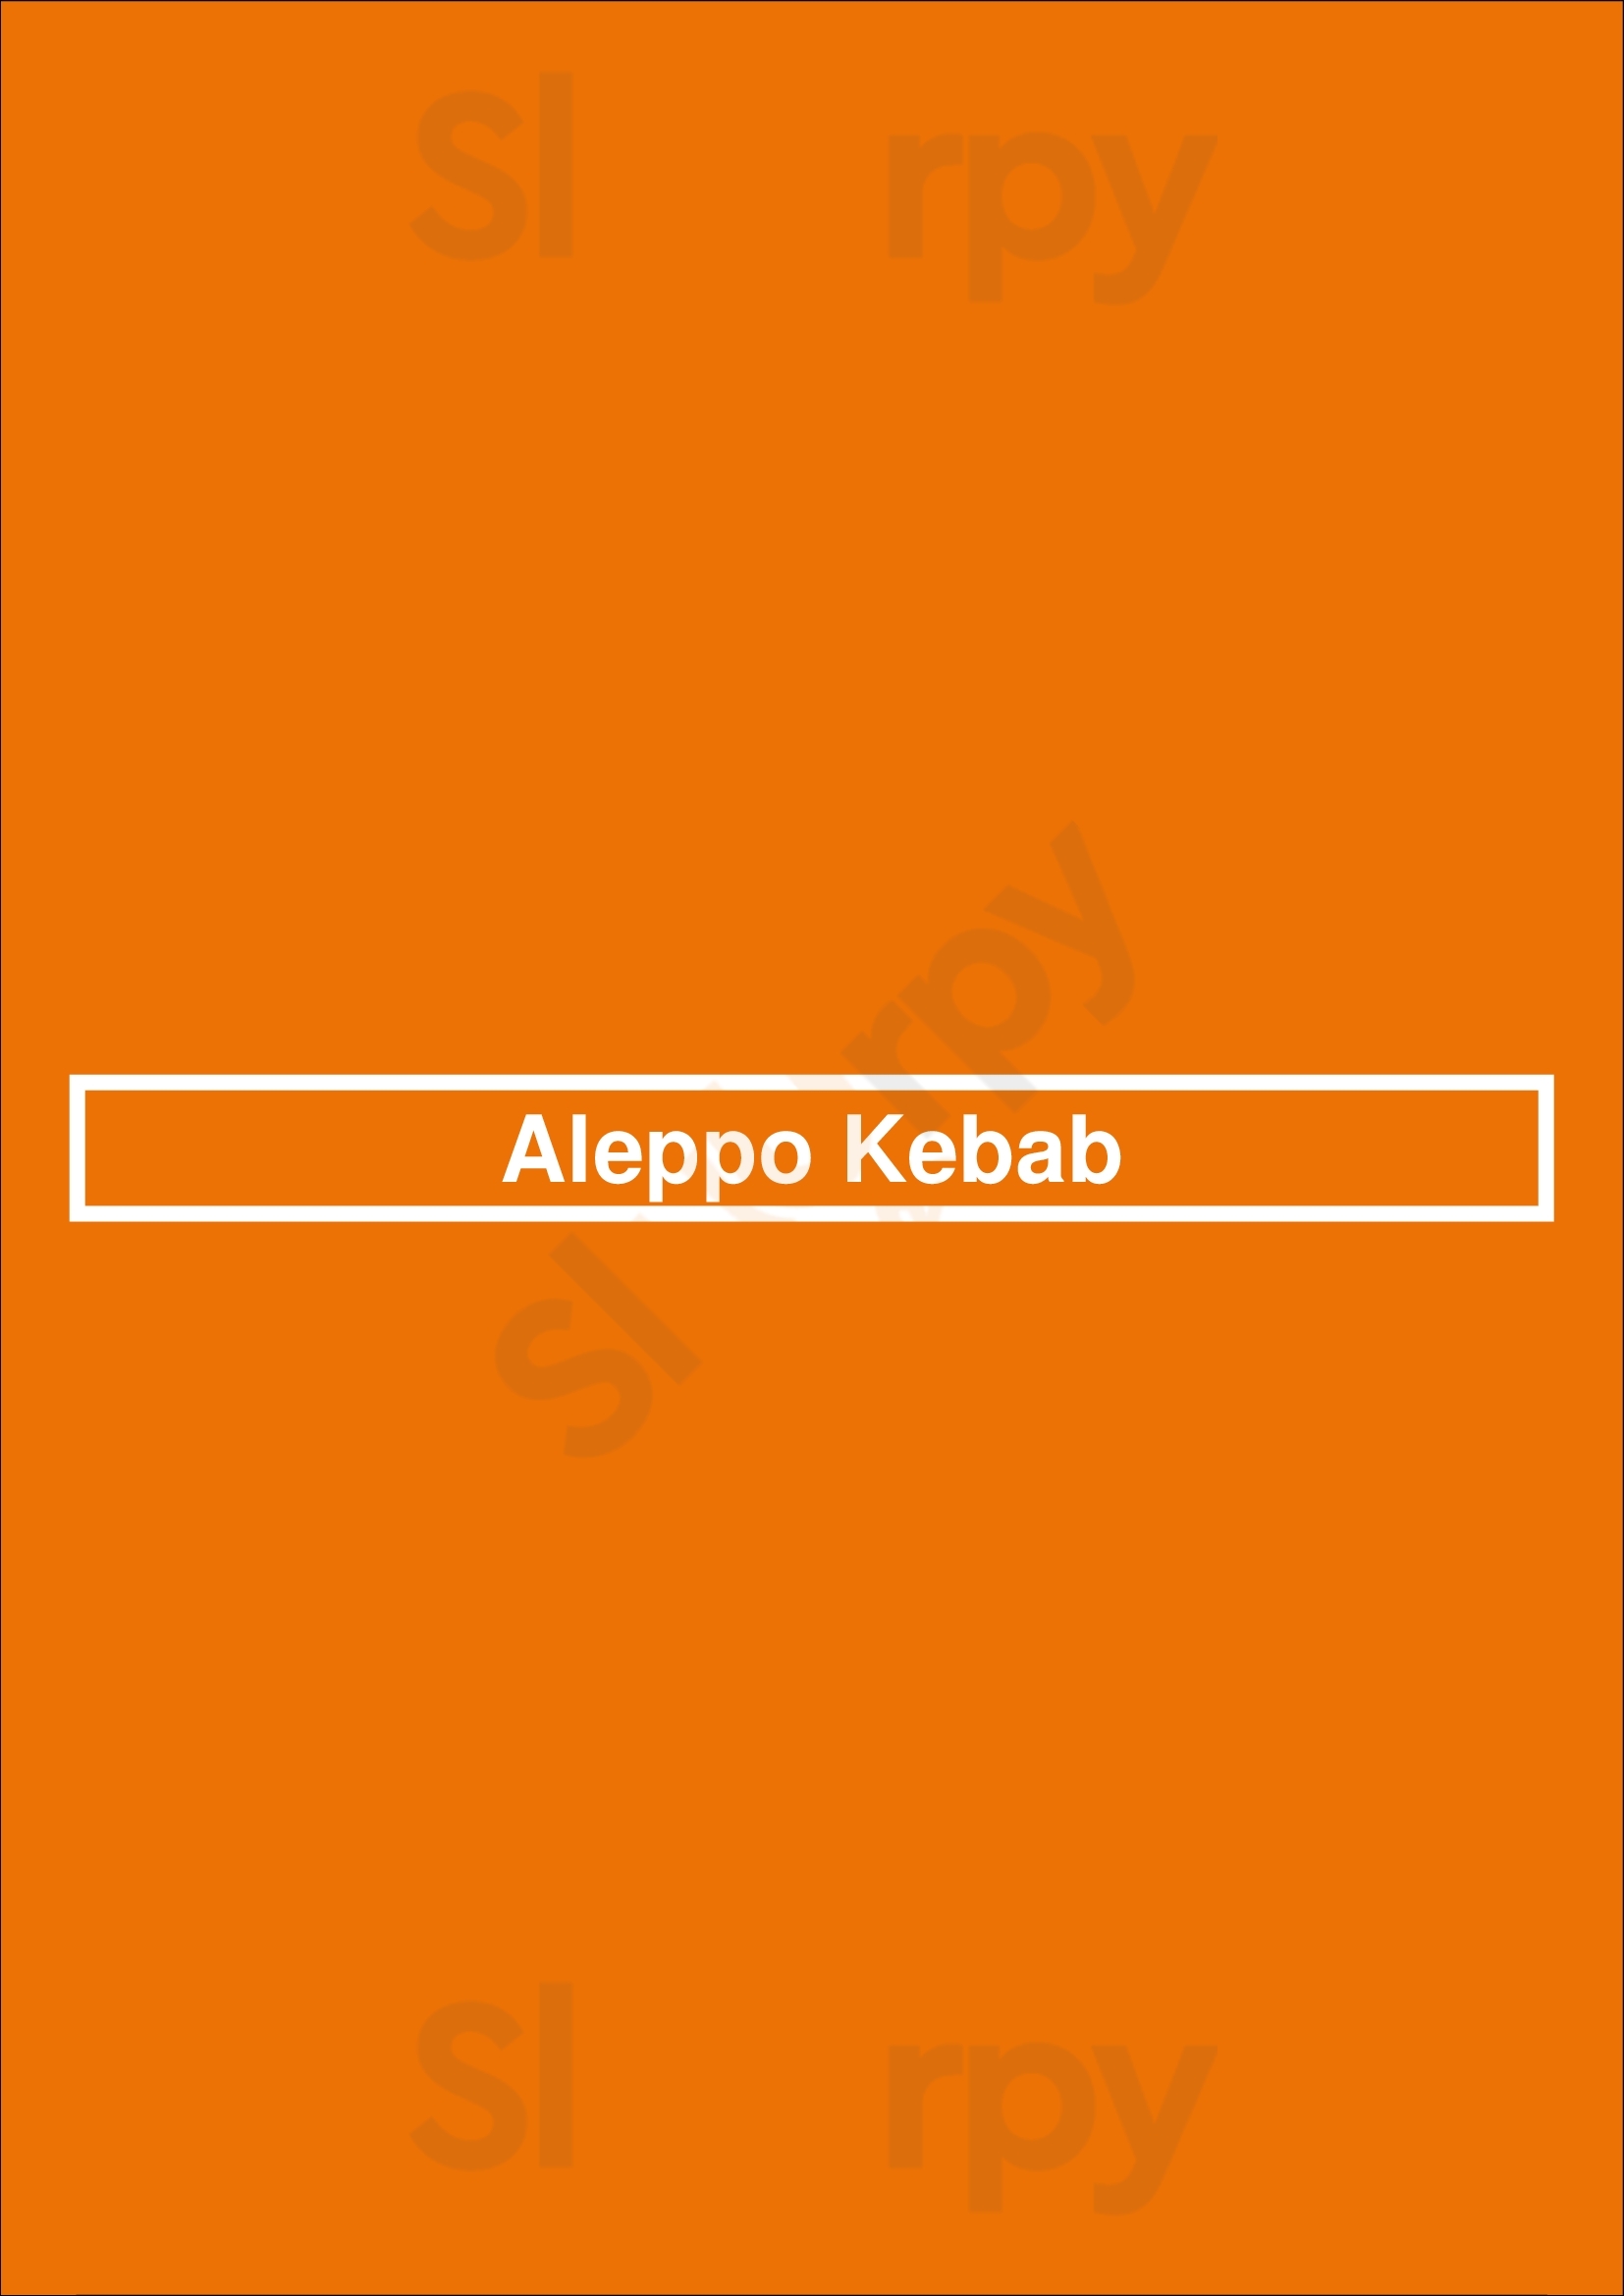 Aleppo Kebab Toronto Menu - 1